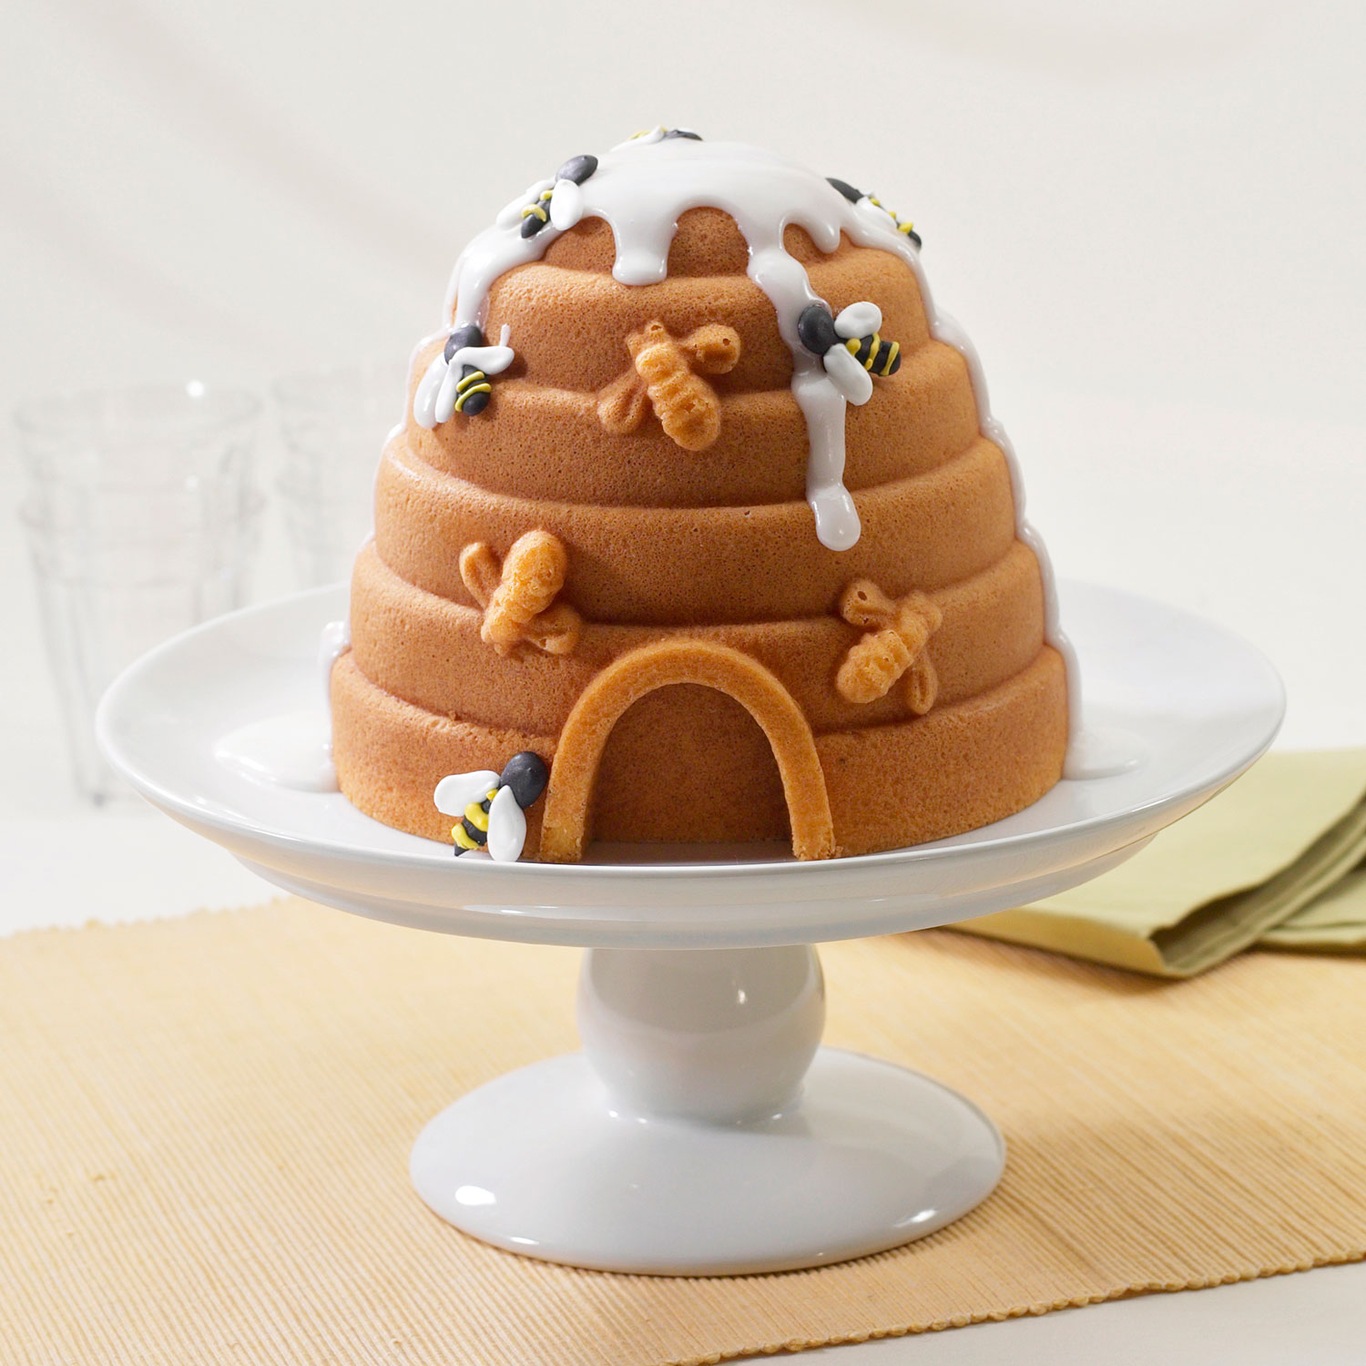 https://royaldesign.com/image/2/nordic-ware-nordic-ware-beehive-cake-bundt-pan-1?w=800&quality=80